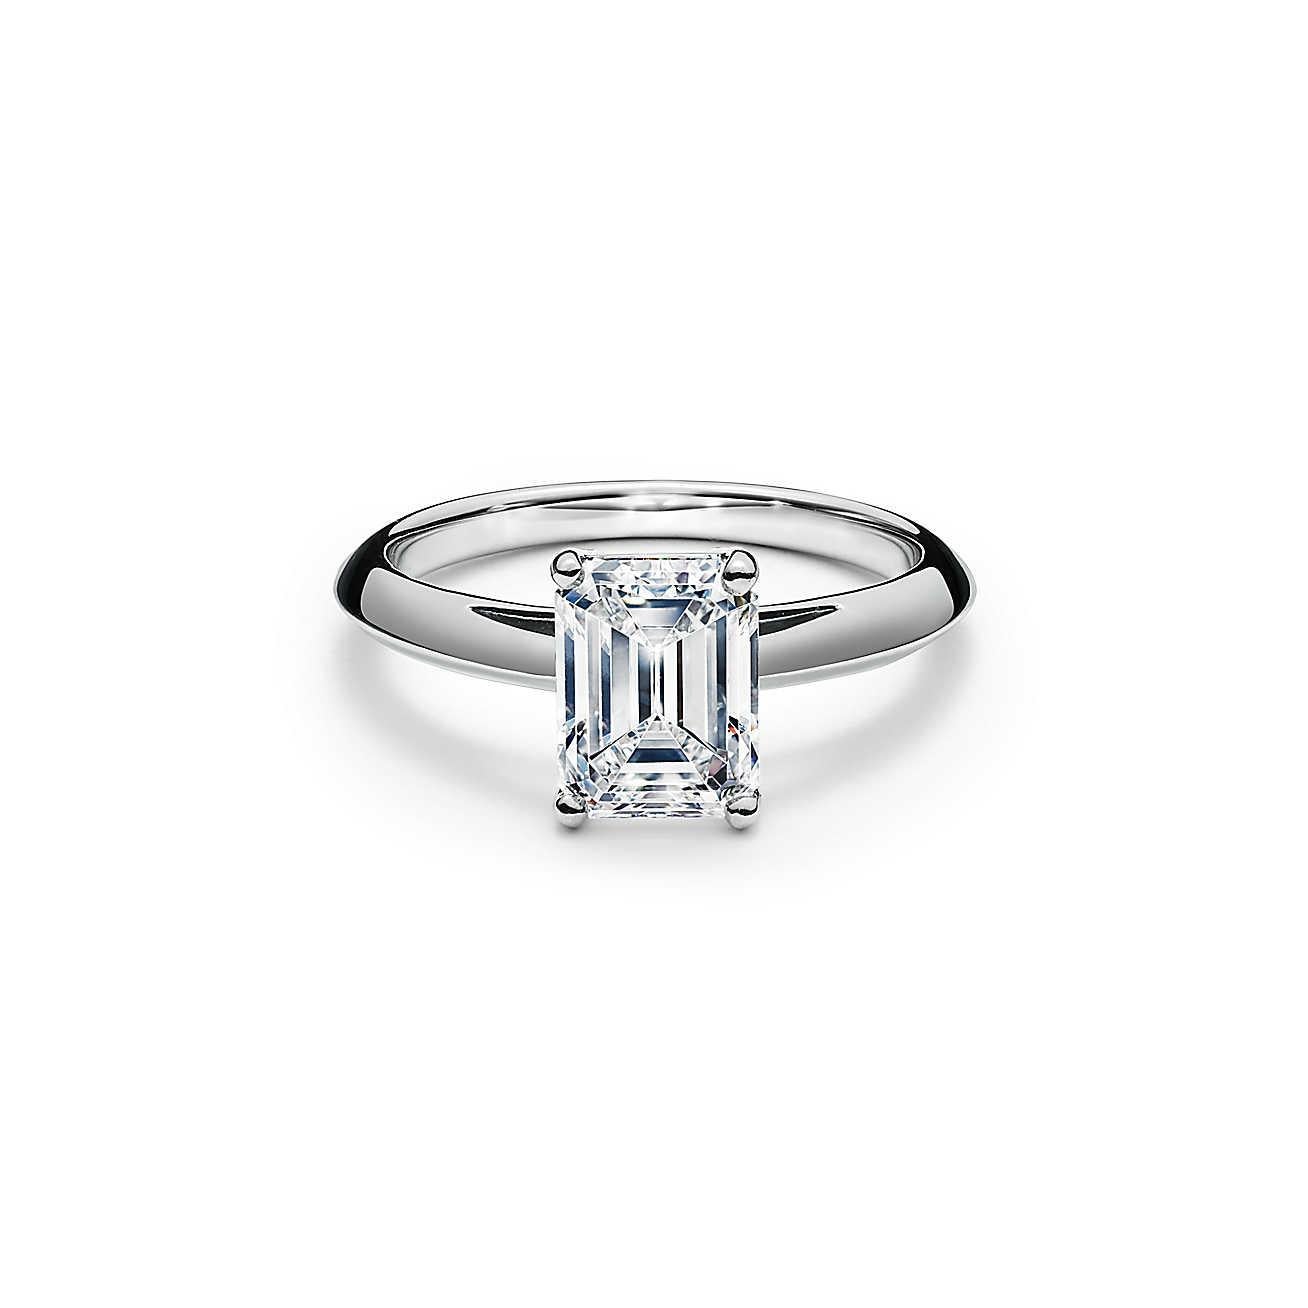 5 carat diamond ring